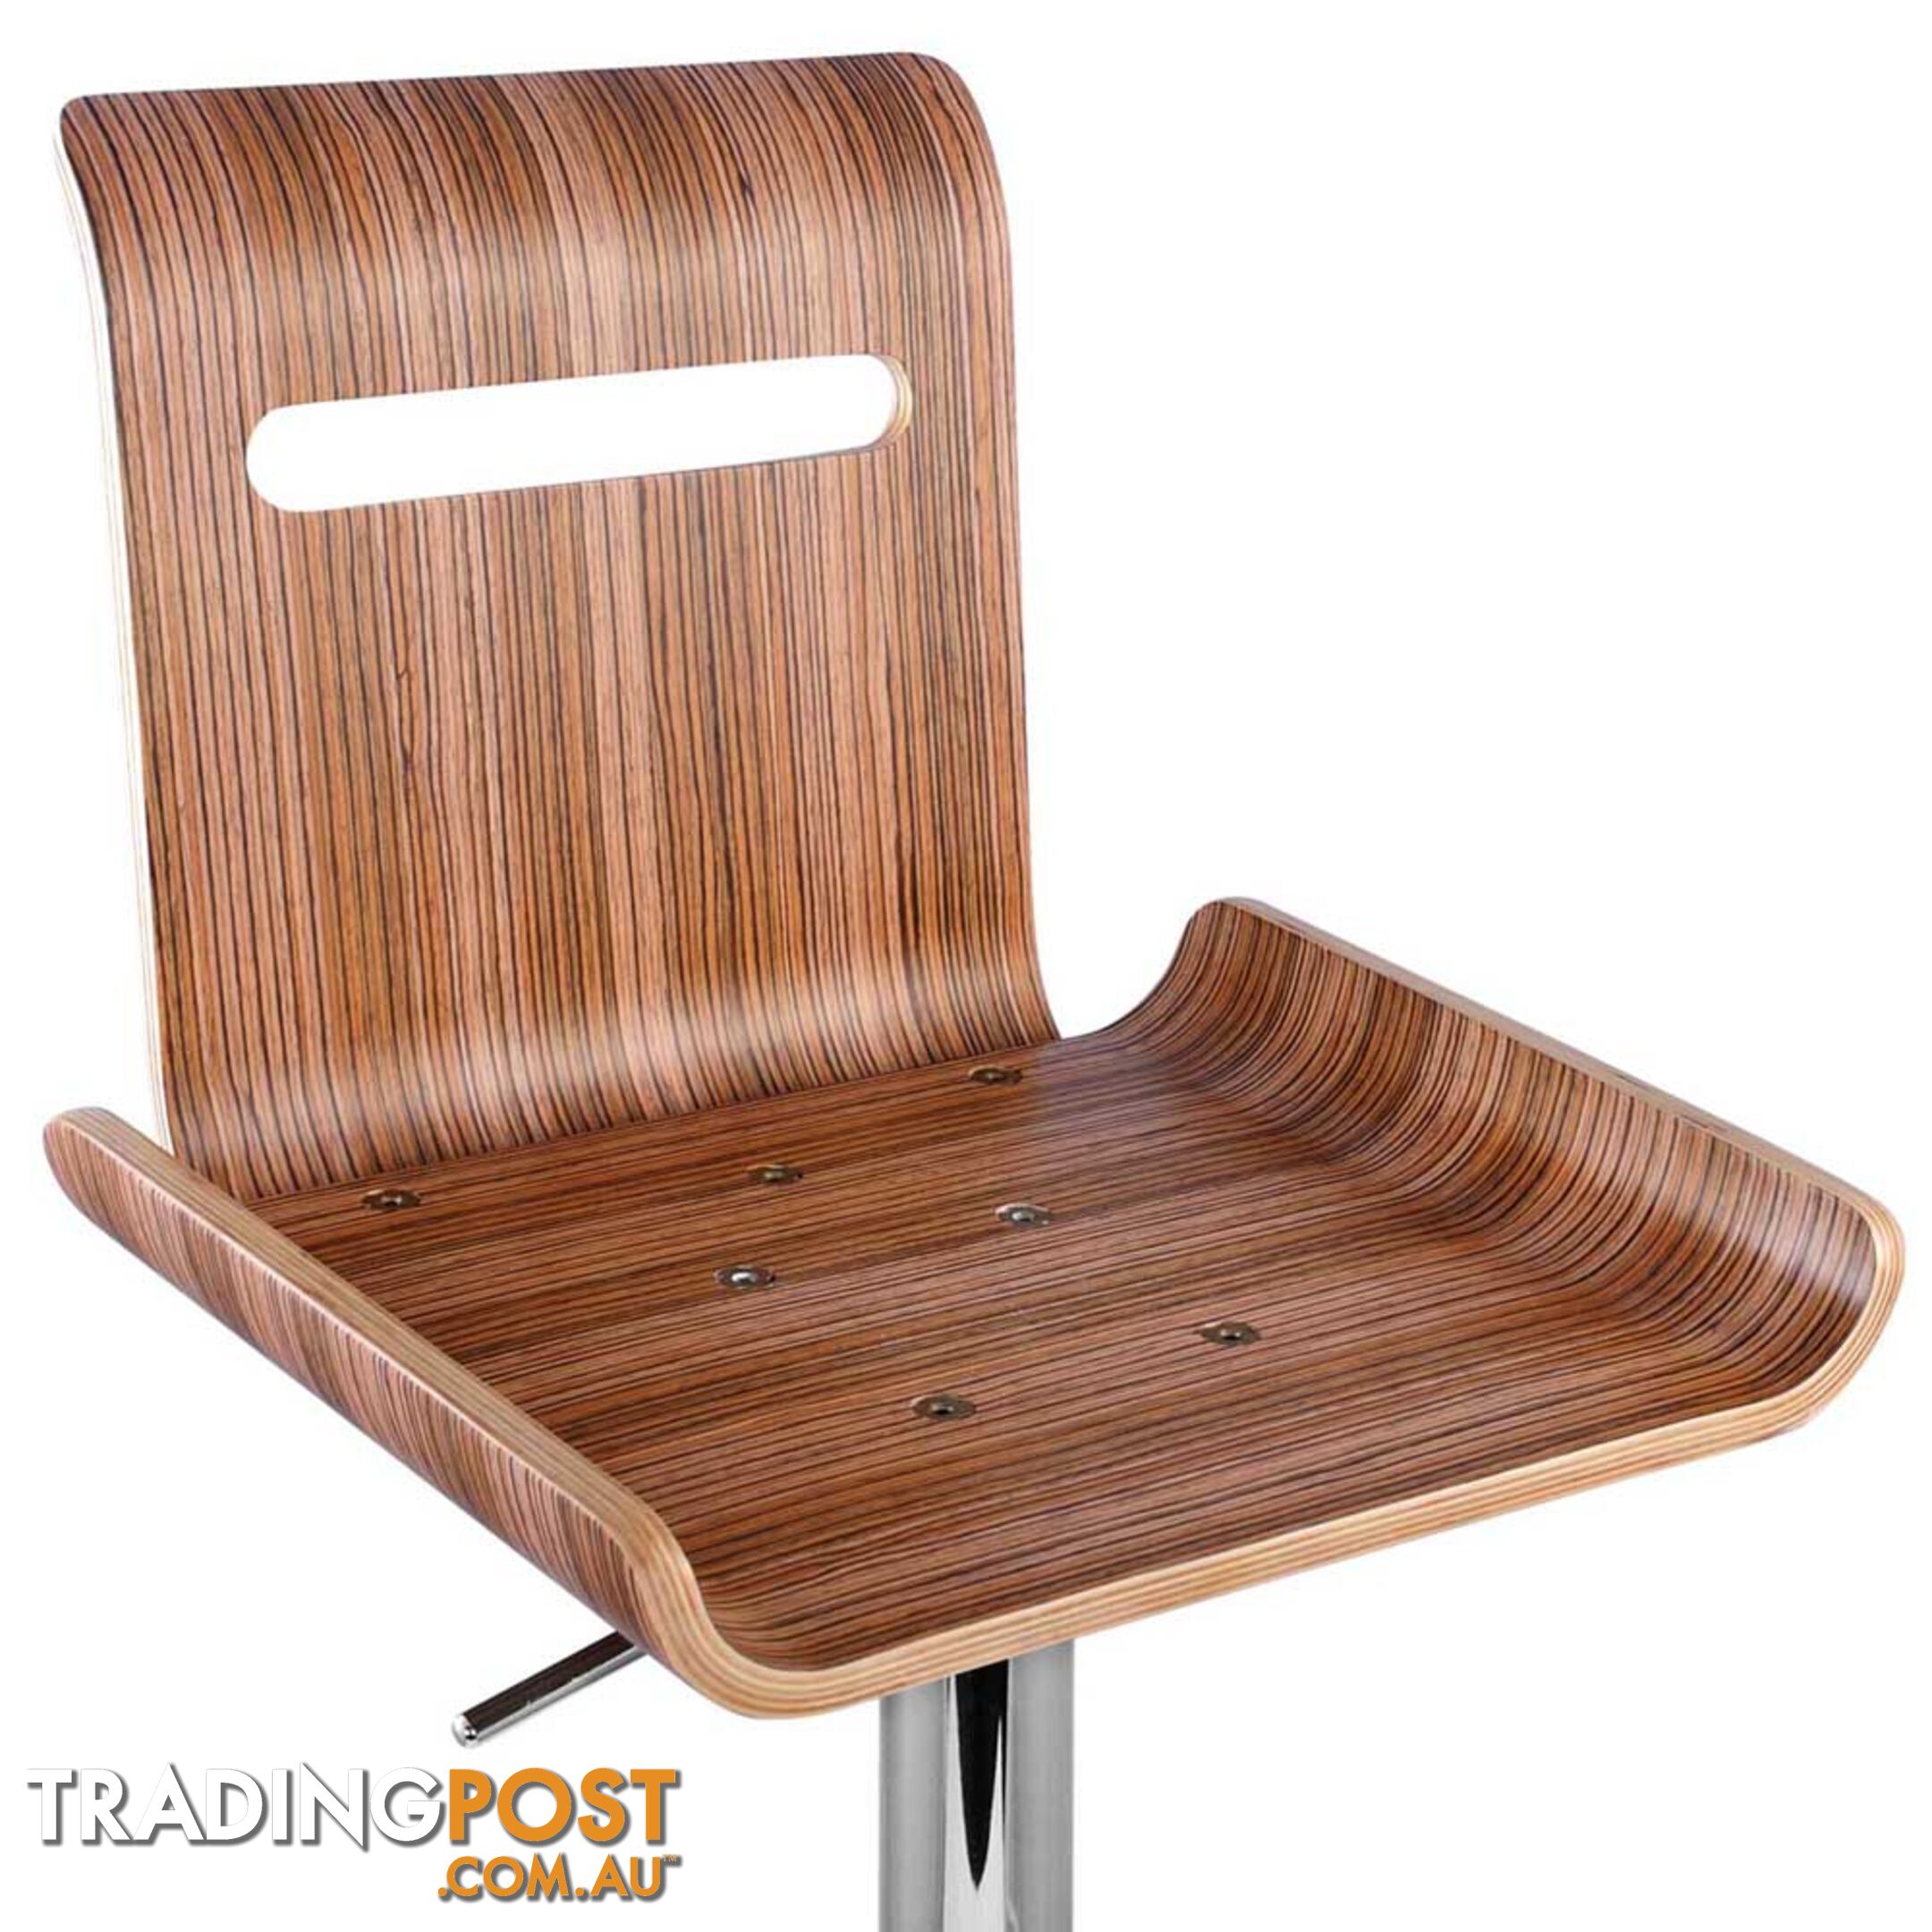 Set of 2 Wooden Bar Stool Kitchen Chair Niomi Natural